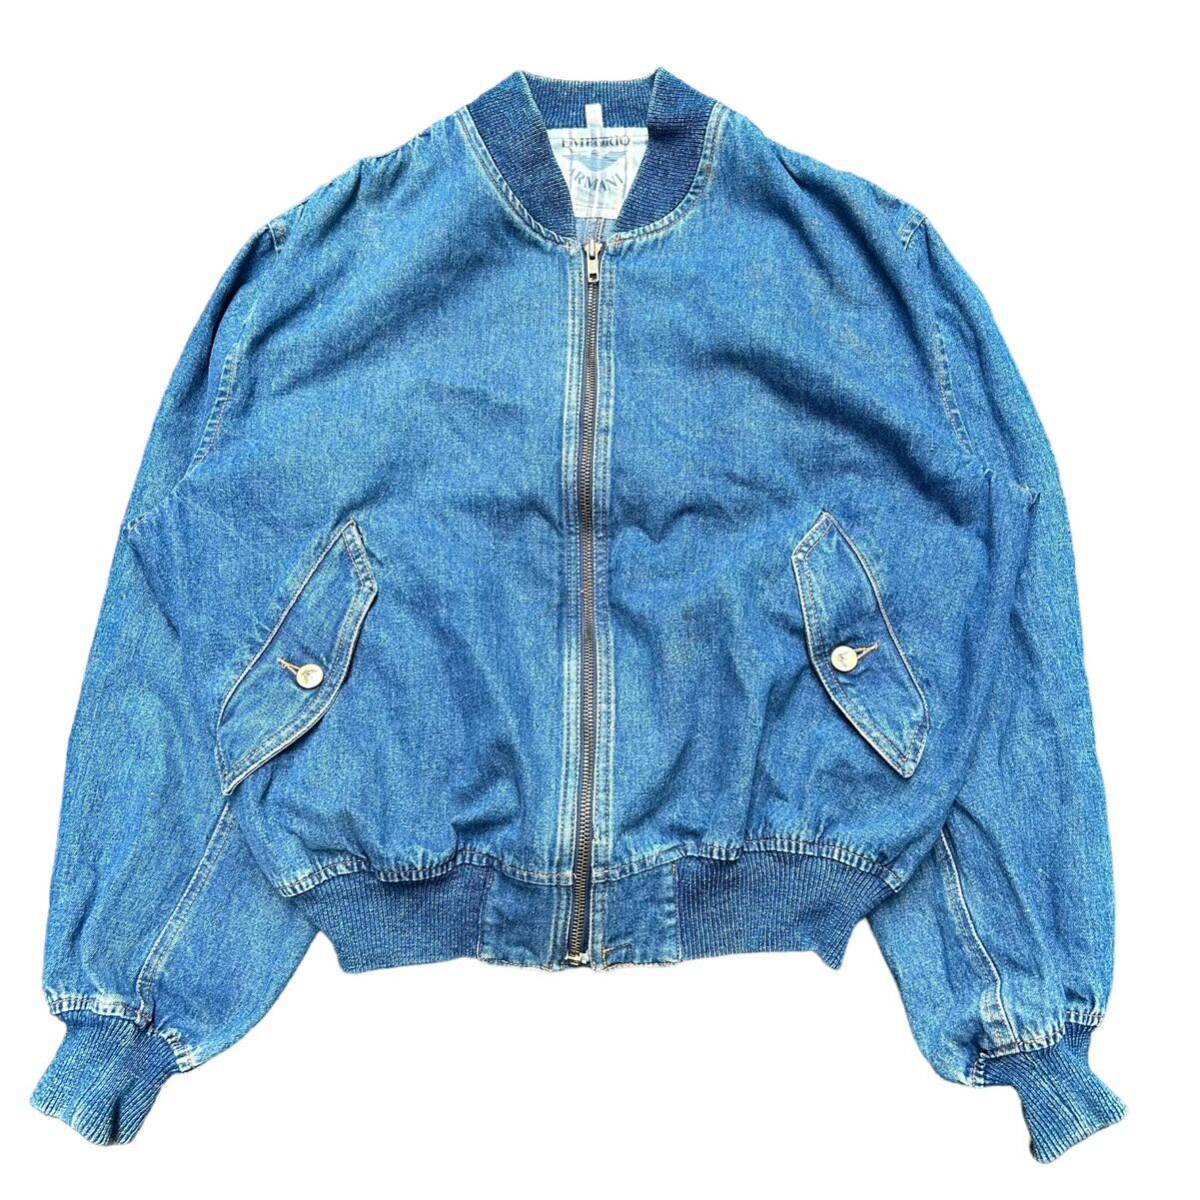 80s EMPORIO ARMANI denim bomber jacket archive アルマーニ import italy design collection jeans military flight 90s rare_画像1